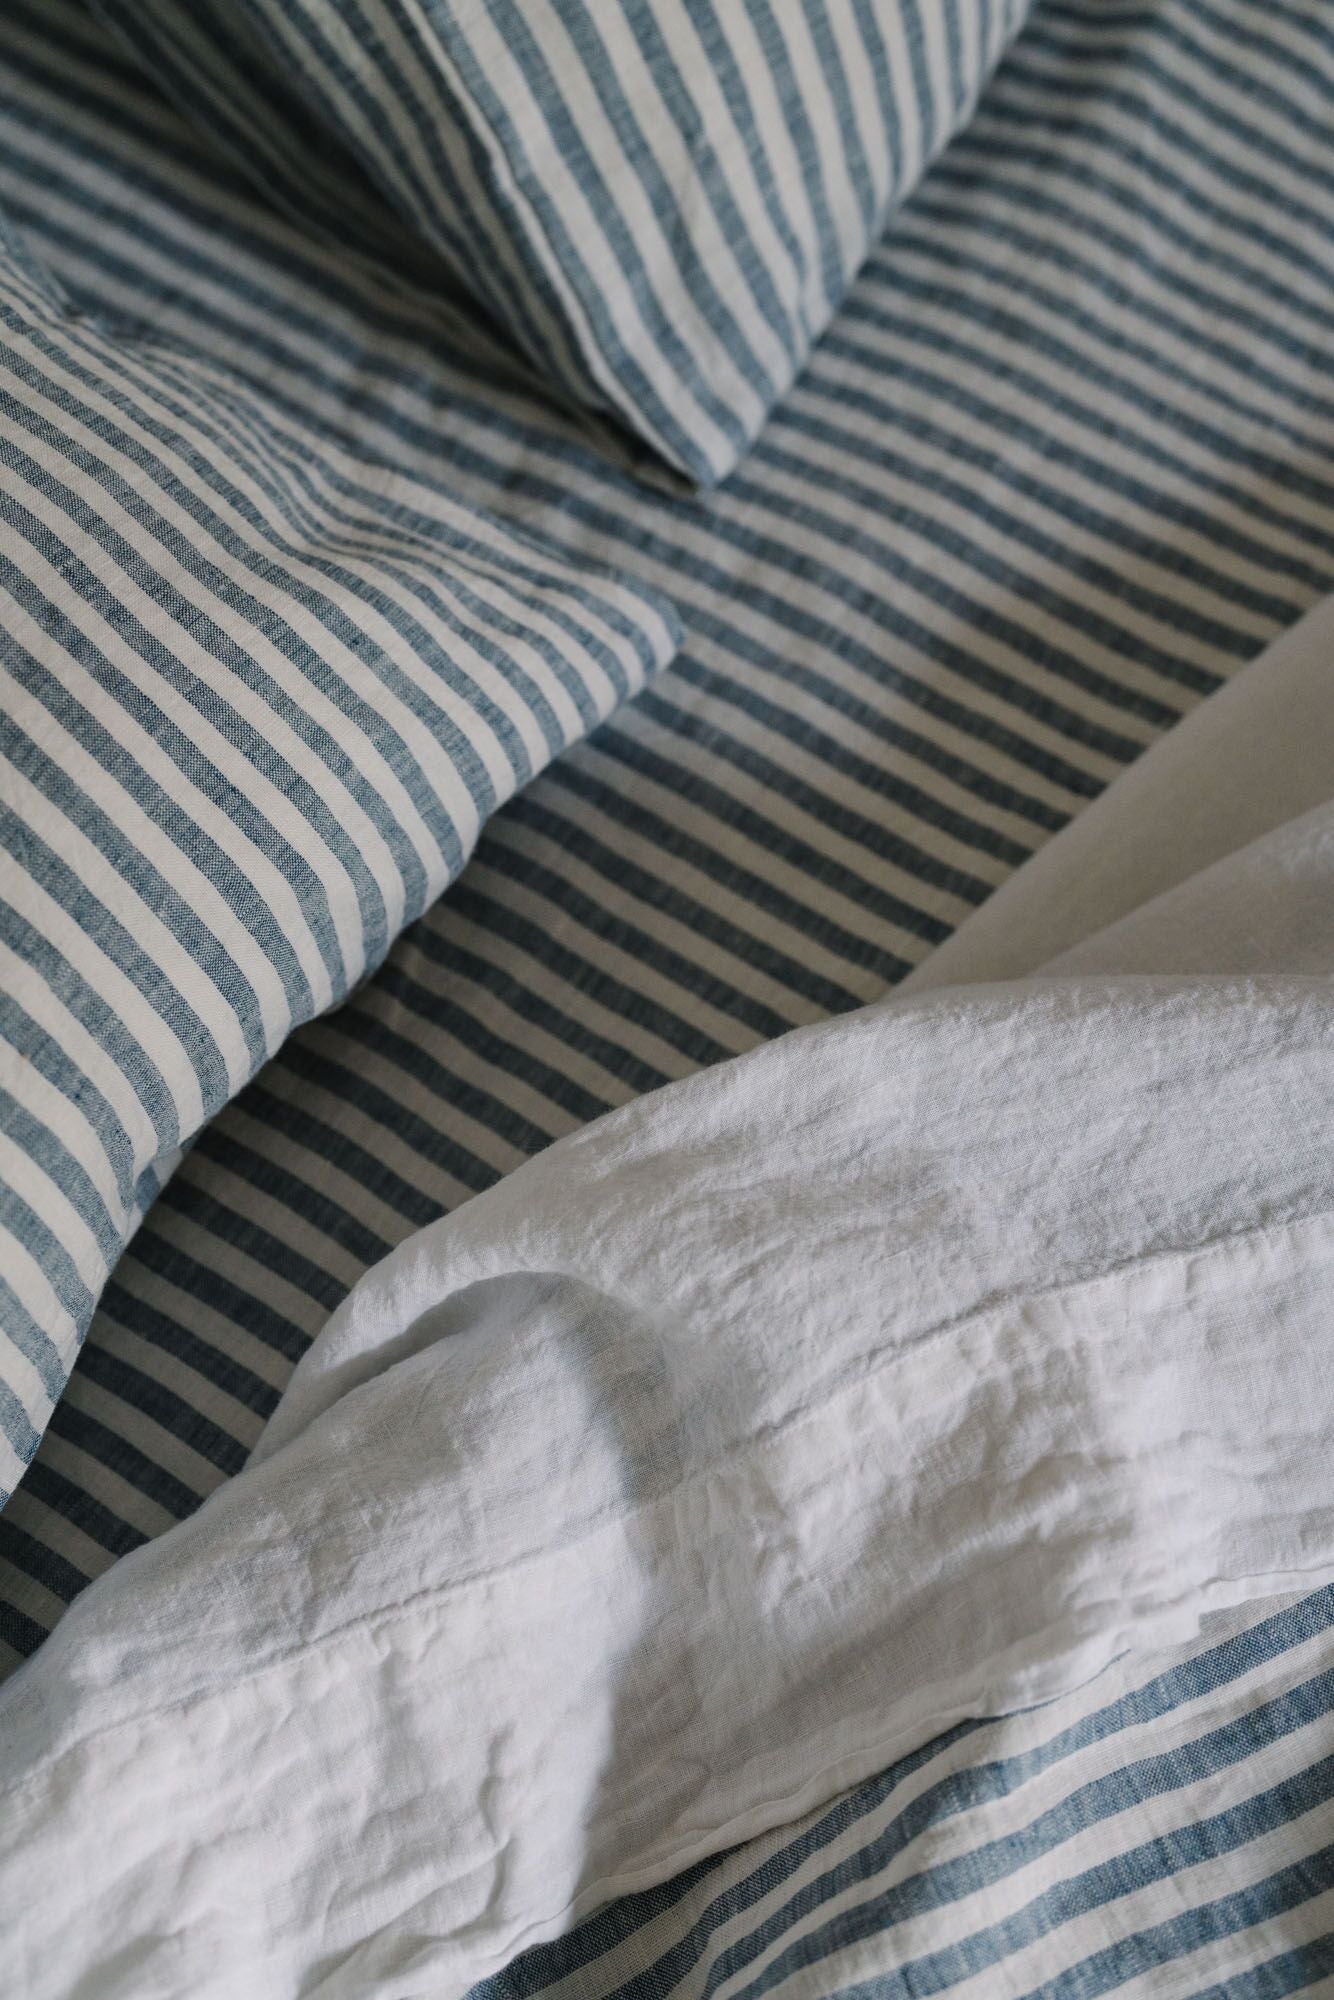 100% Linen Pillowslip Set in French Navy Stripe